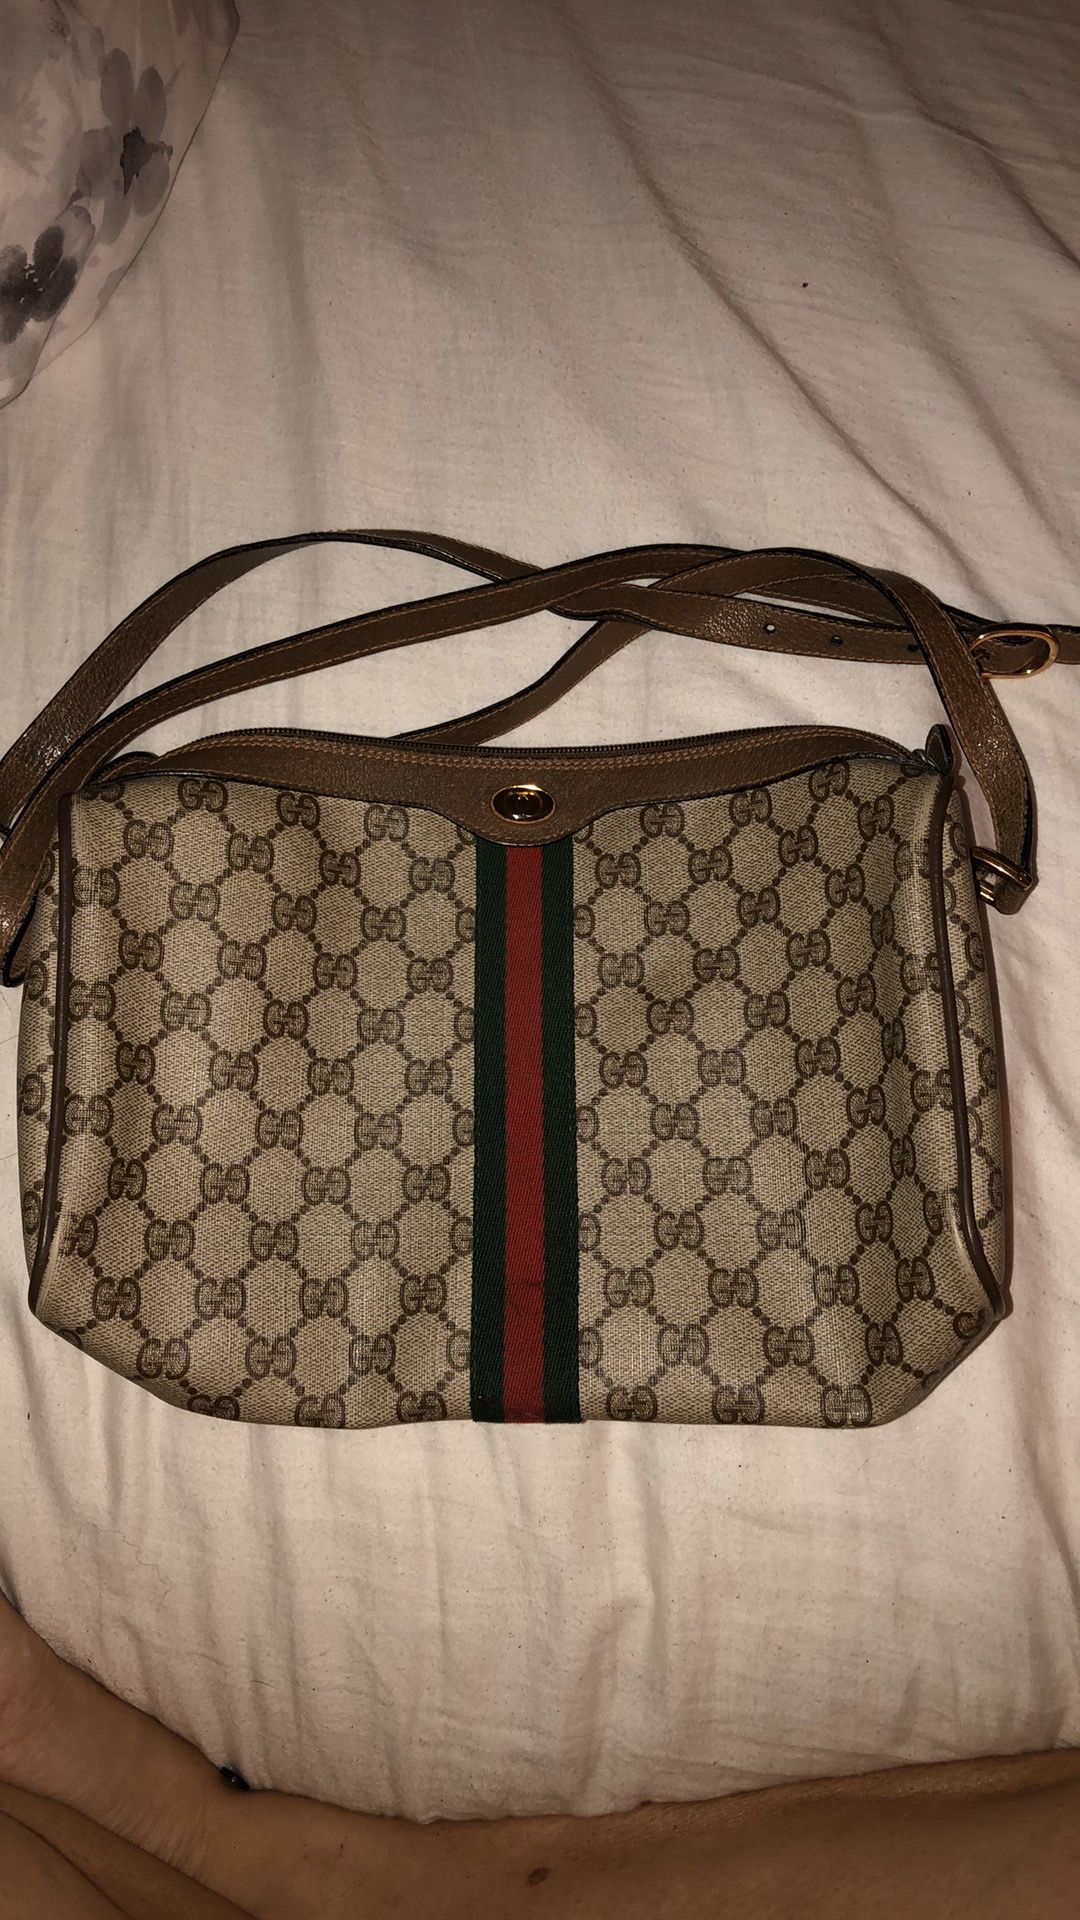 Vintage Gucci crossbody bag